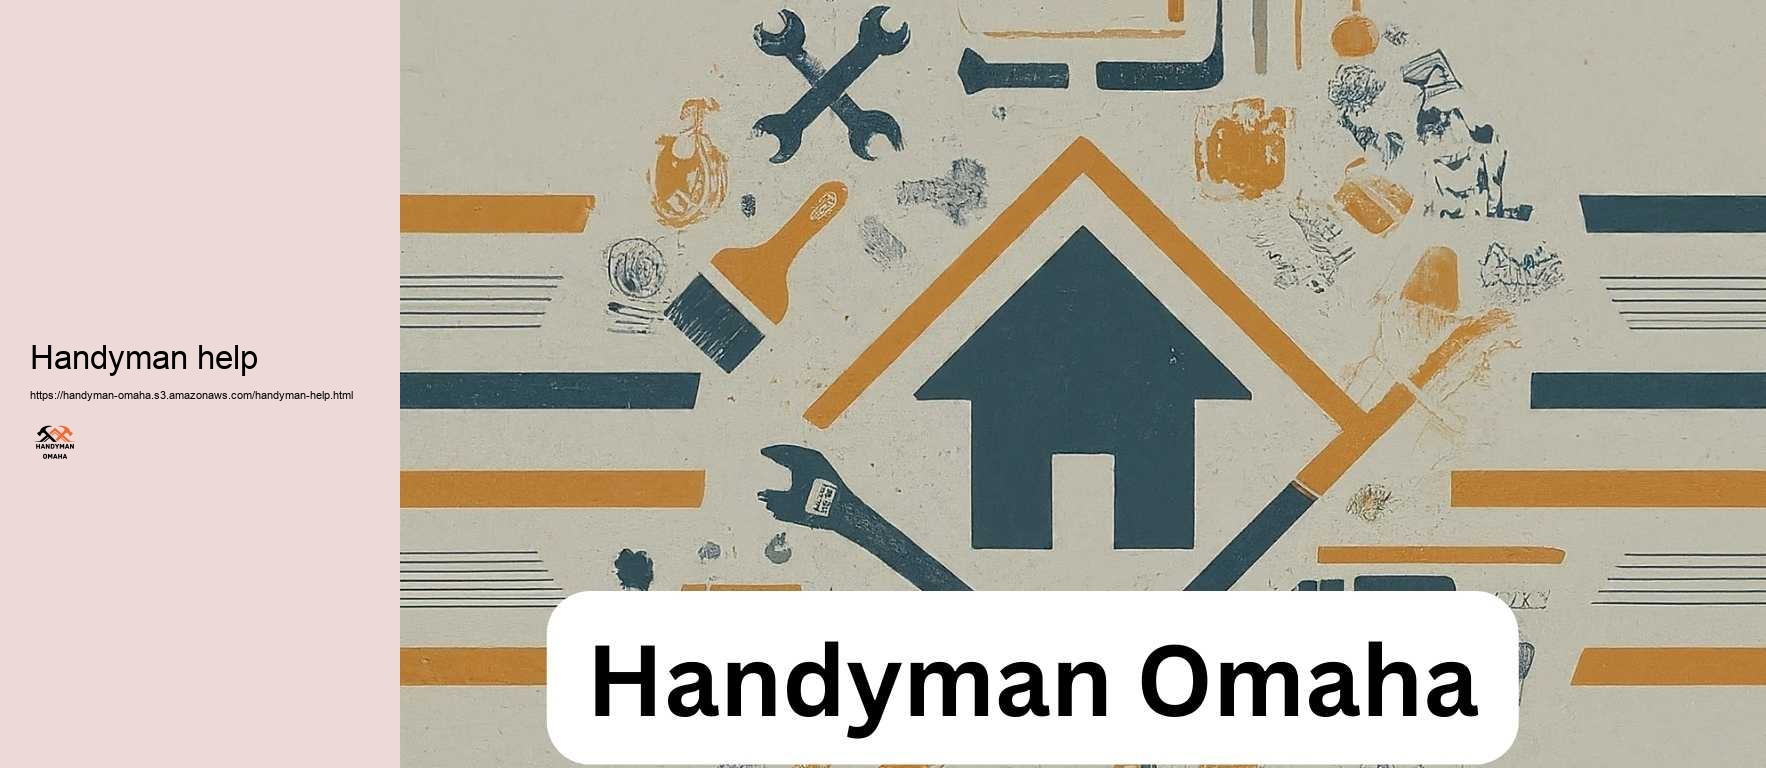 Handyman help